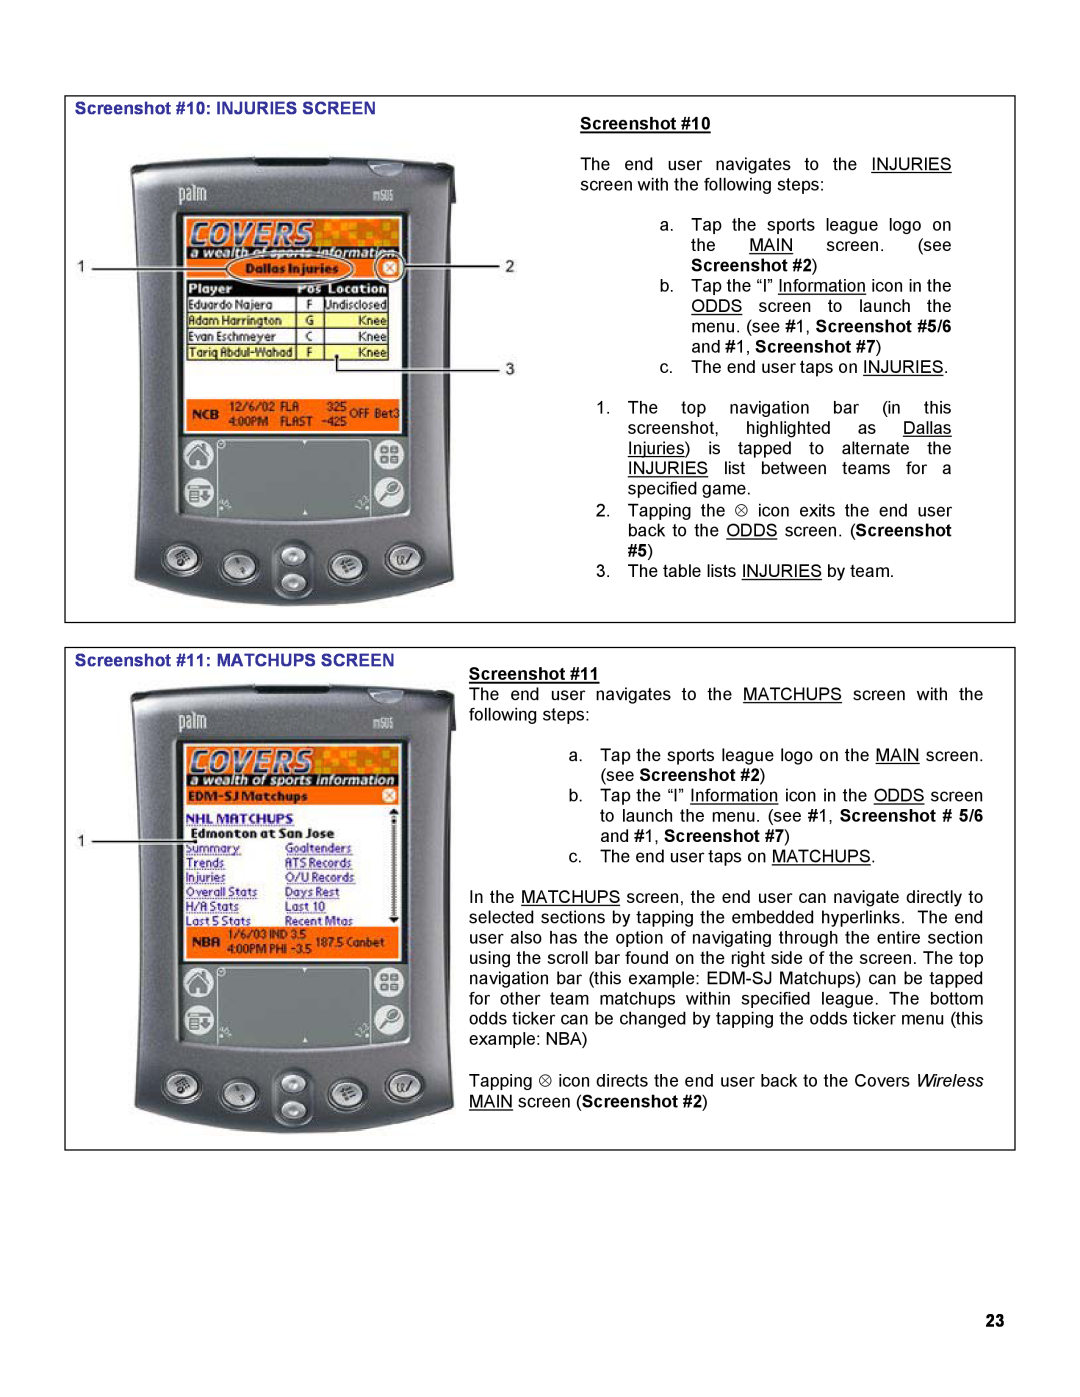 Palm OS Devices manual Screenshot #10 INJURIES SCREEN, Screenshot #11 MATCHUPS SCREEN, MAIN screen Screenshot #2 